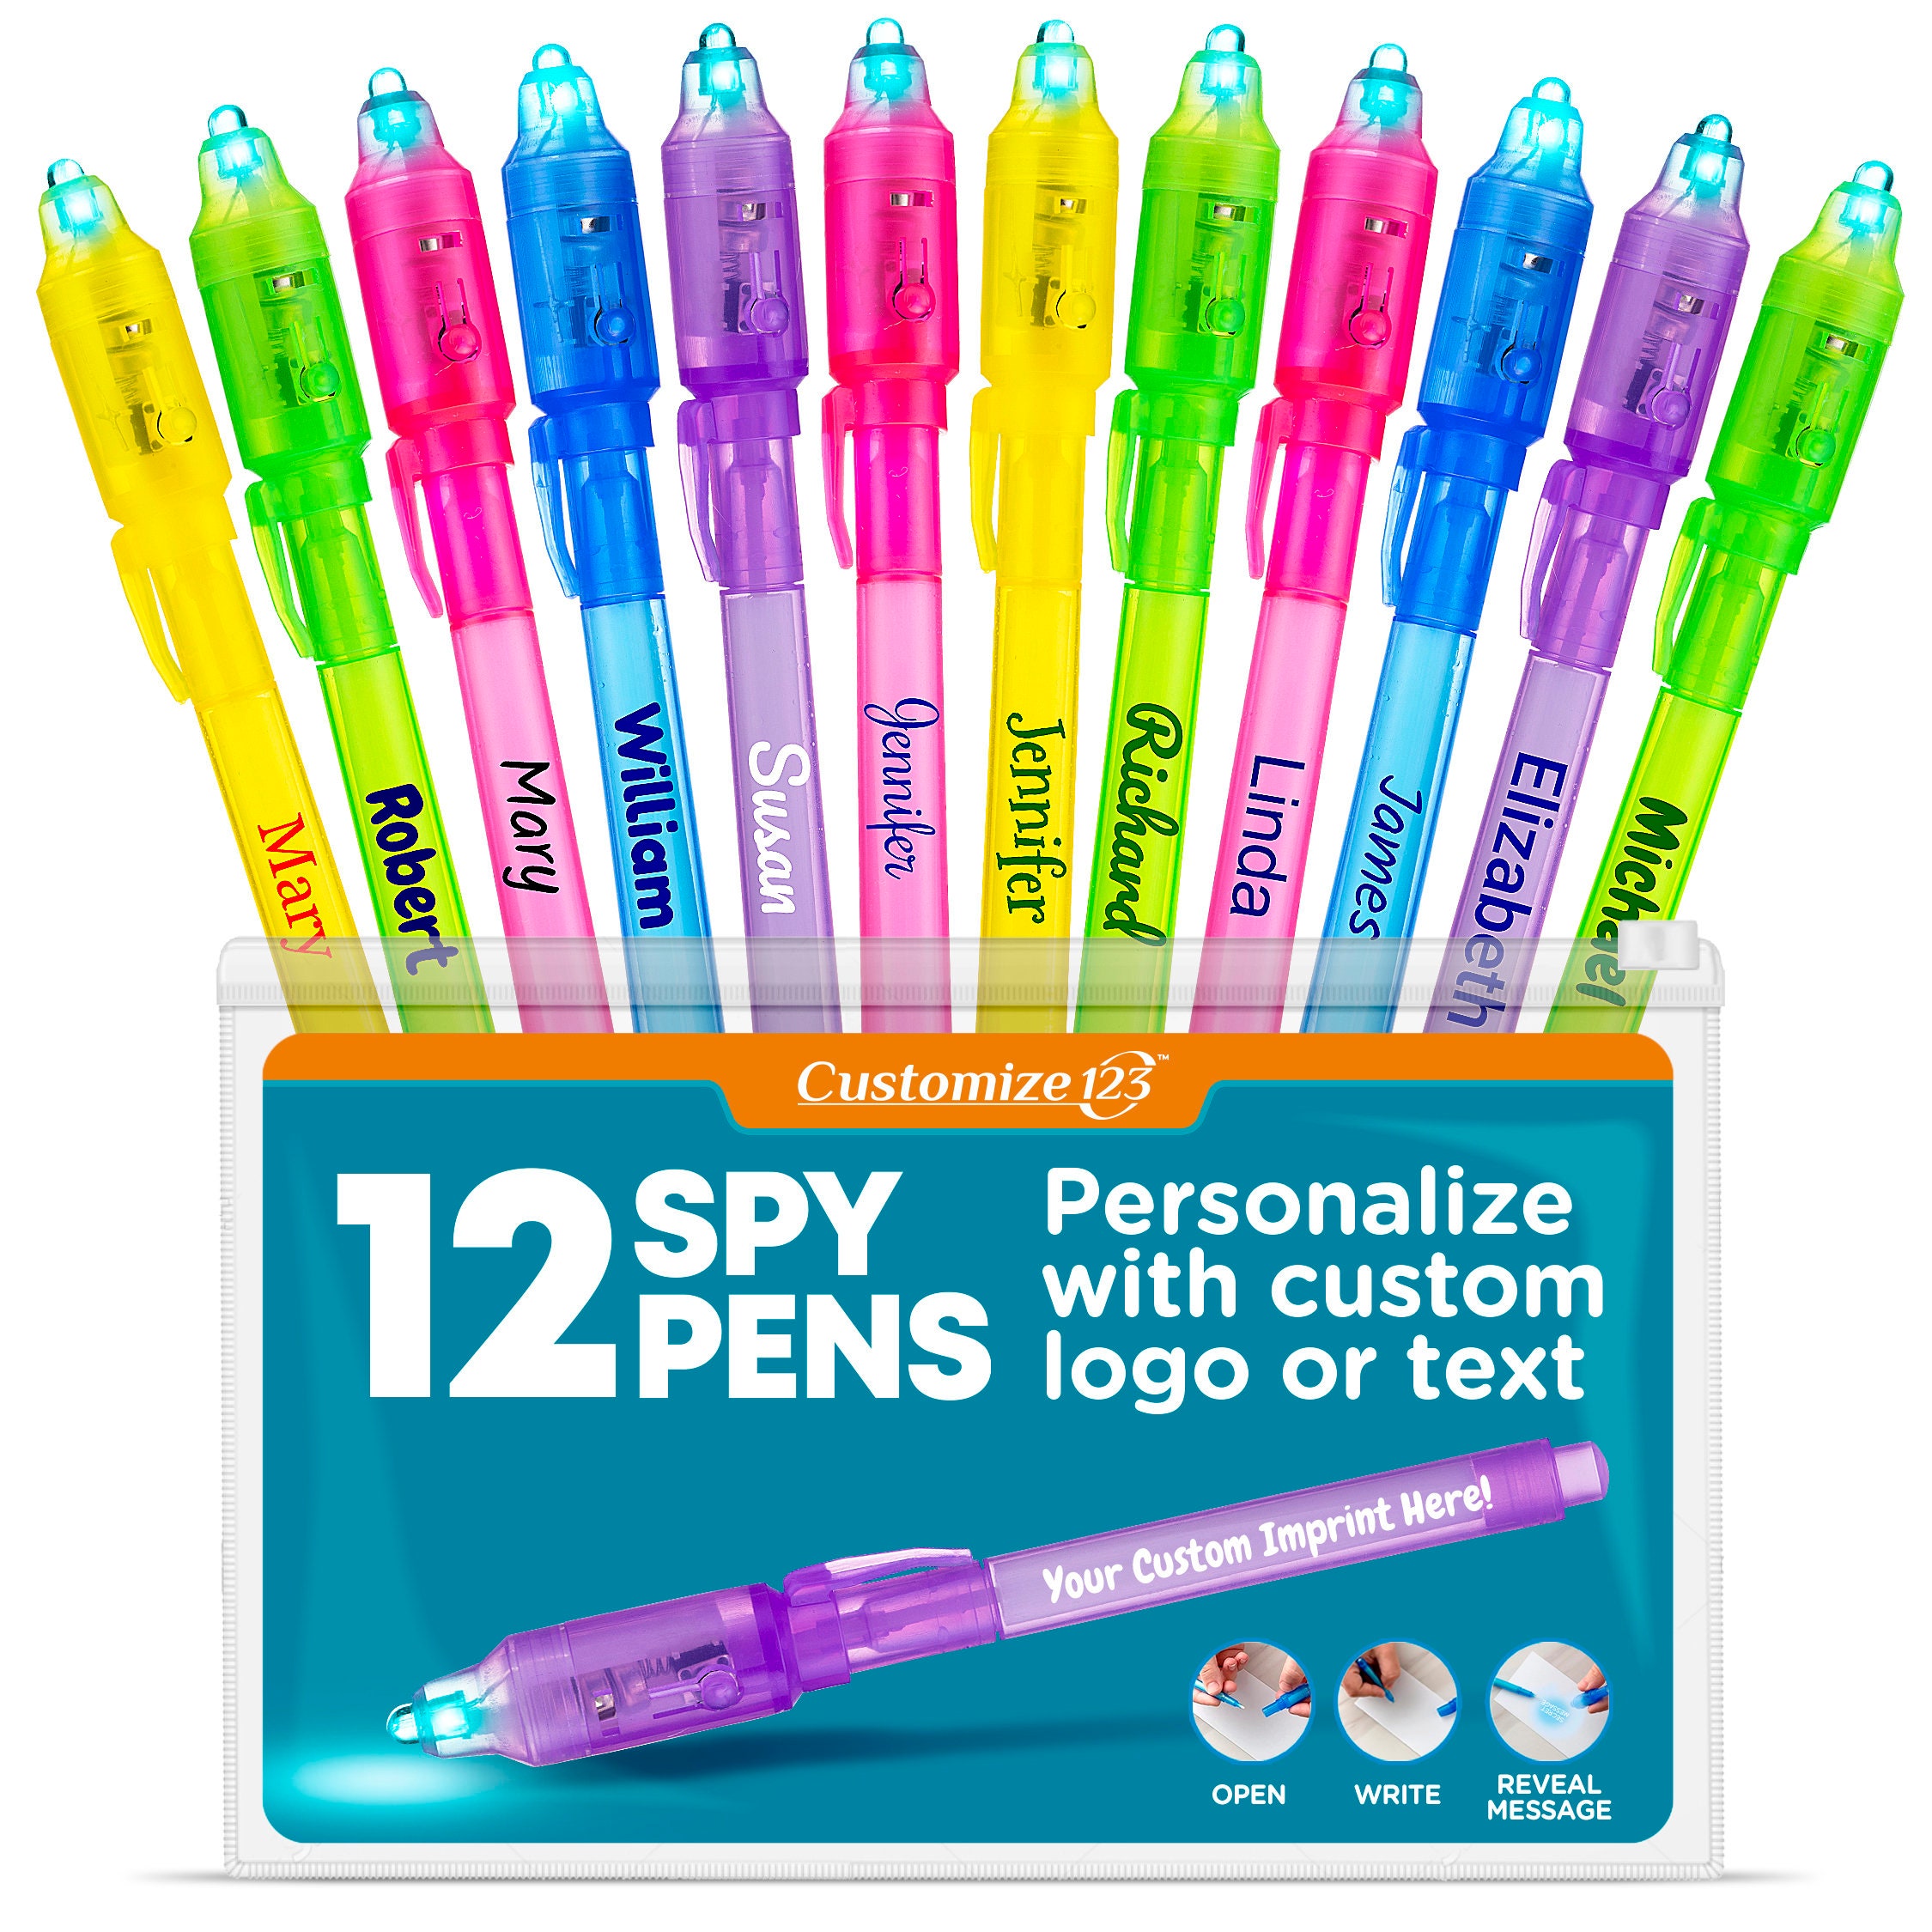  Littfun Cool Pens Fun Pens for kids Novelty Pens Cute Pens  Interesting Racing Car Pens for Boys(set of 12) : Office Products